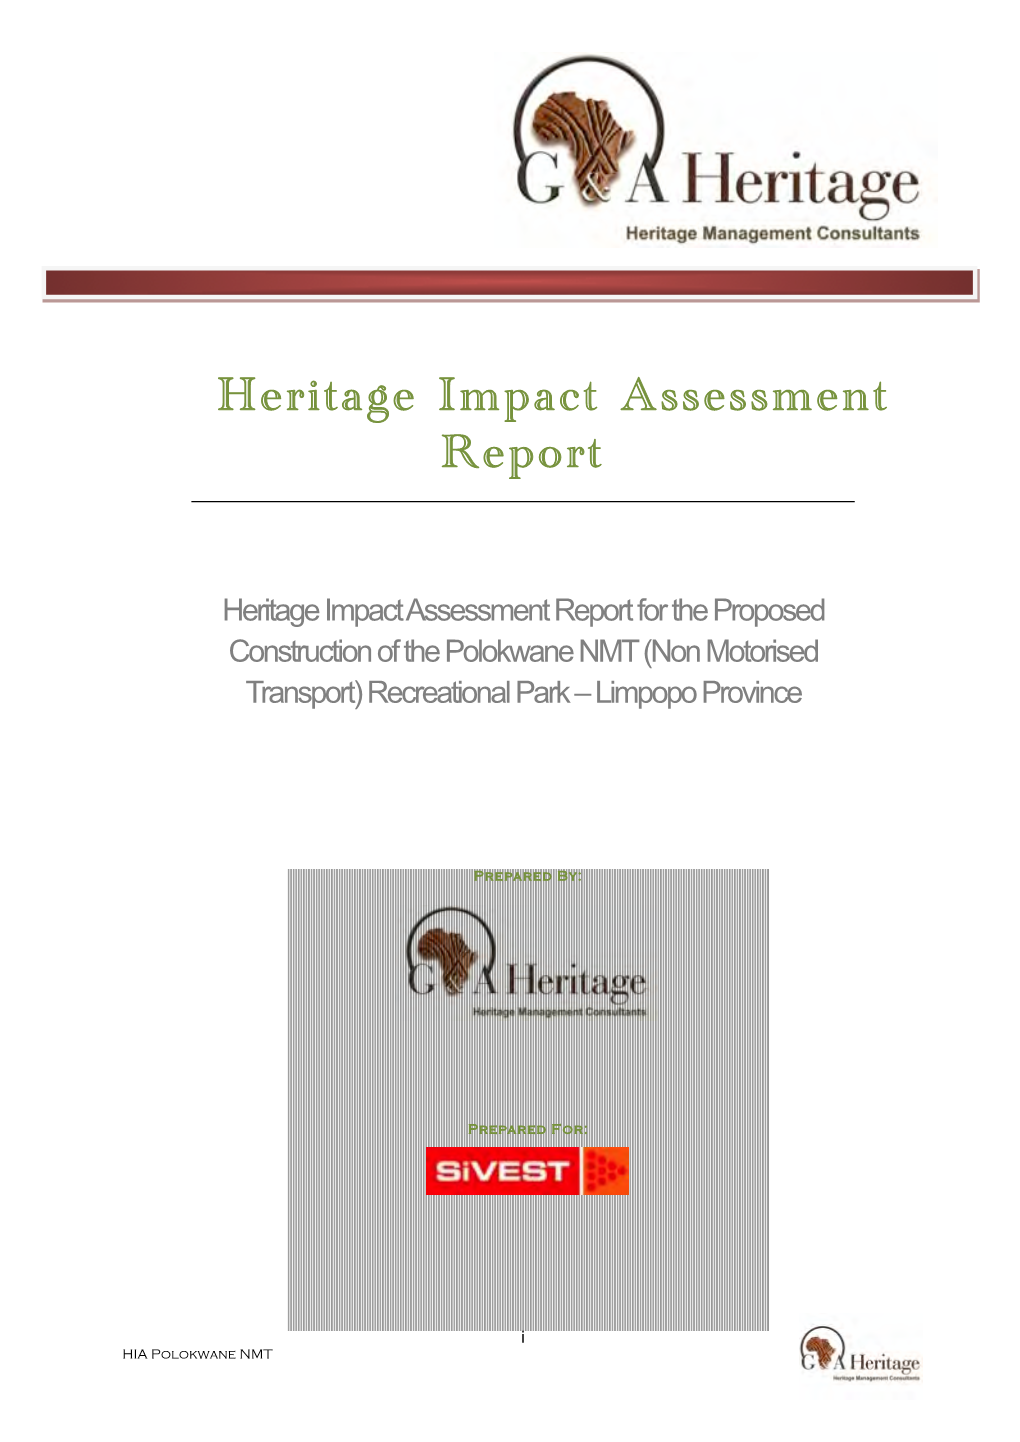 Heritage Impact Assessment Report